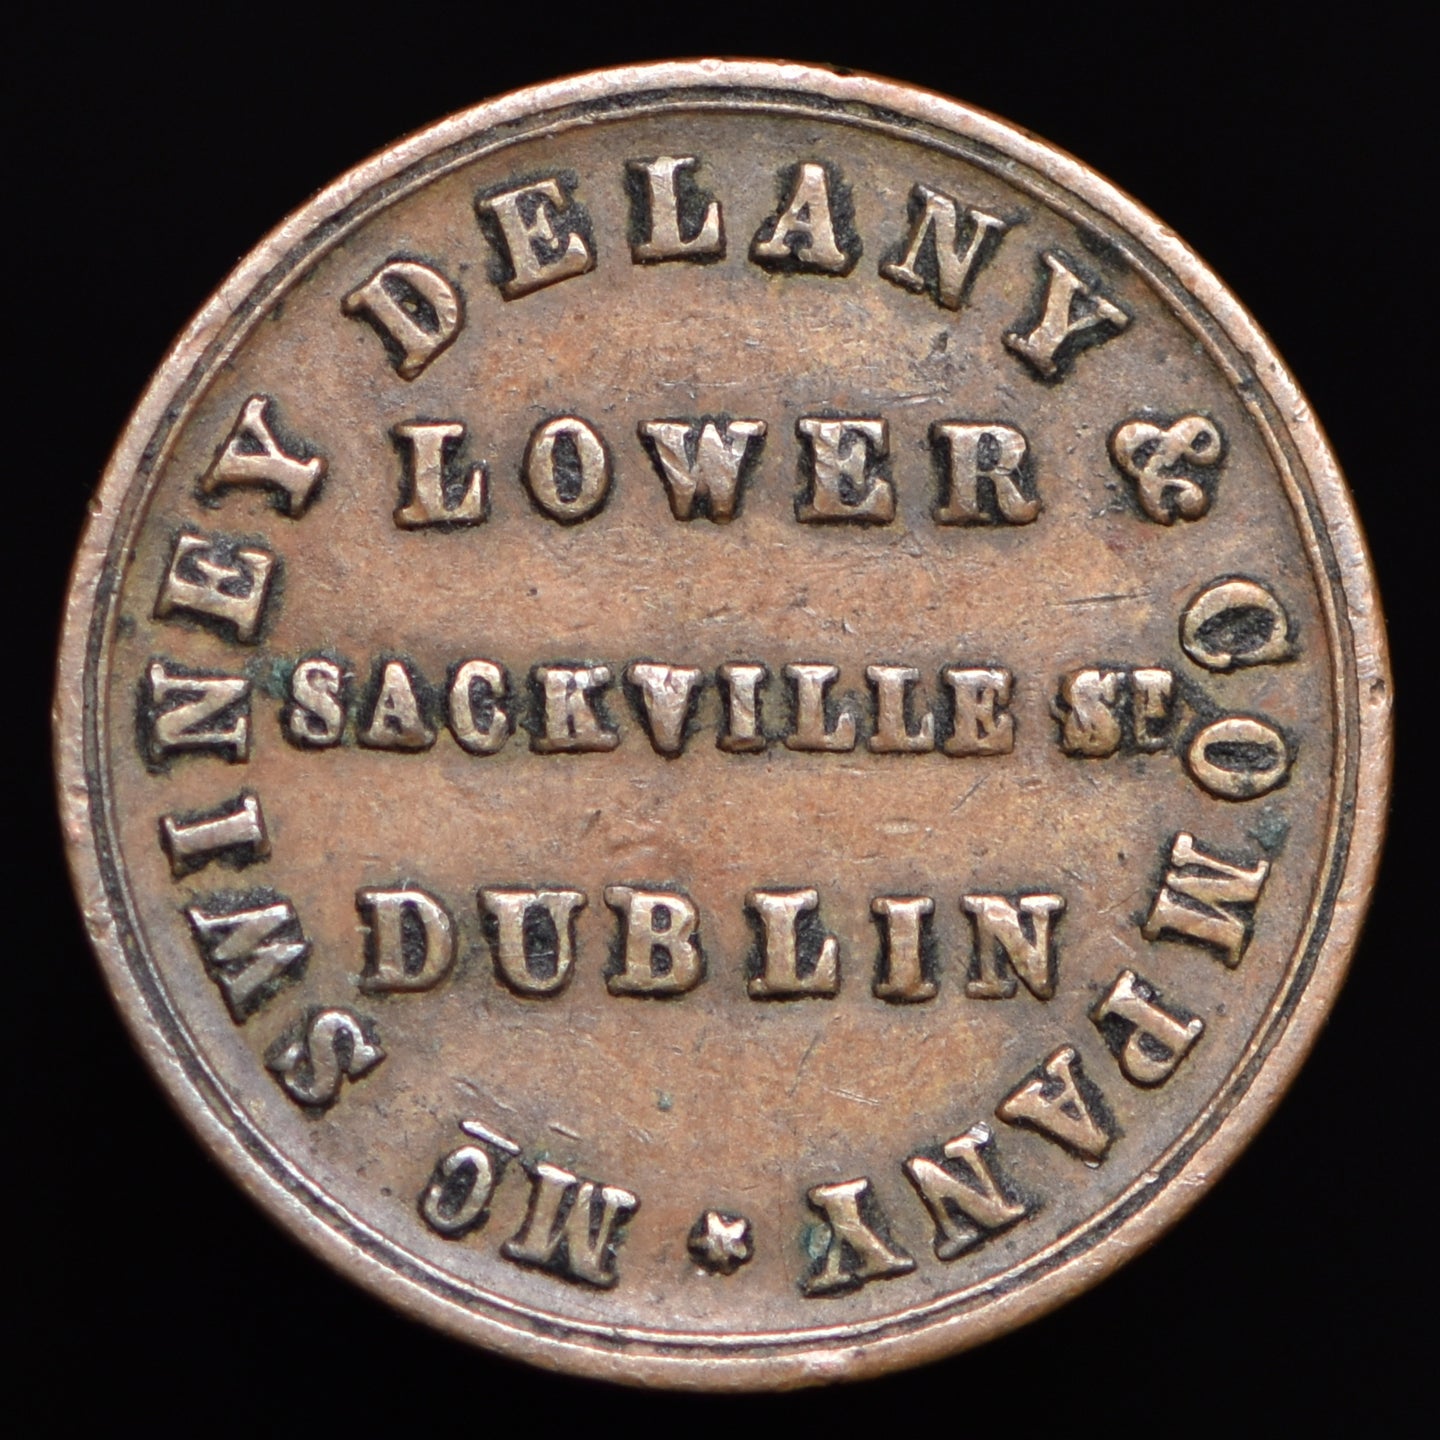 Dublin, McSwiney, Delany & Co. W. 6160